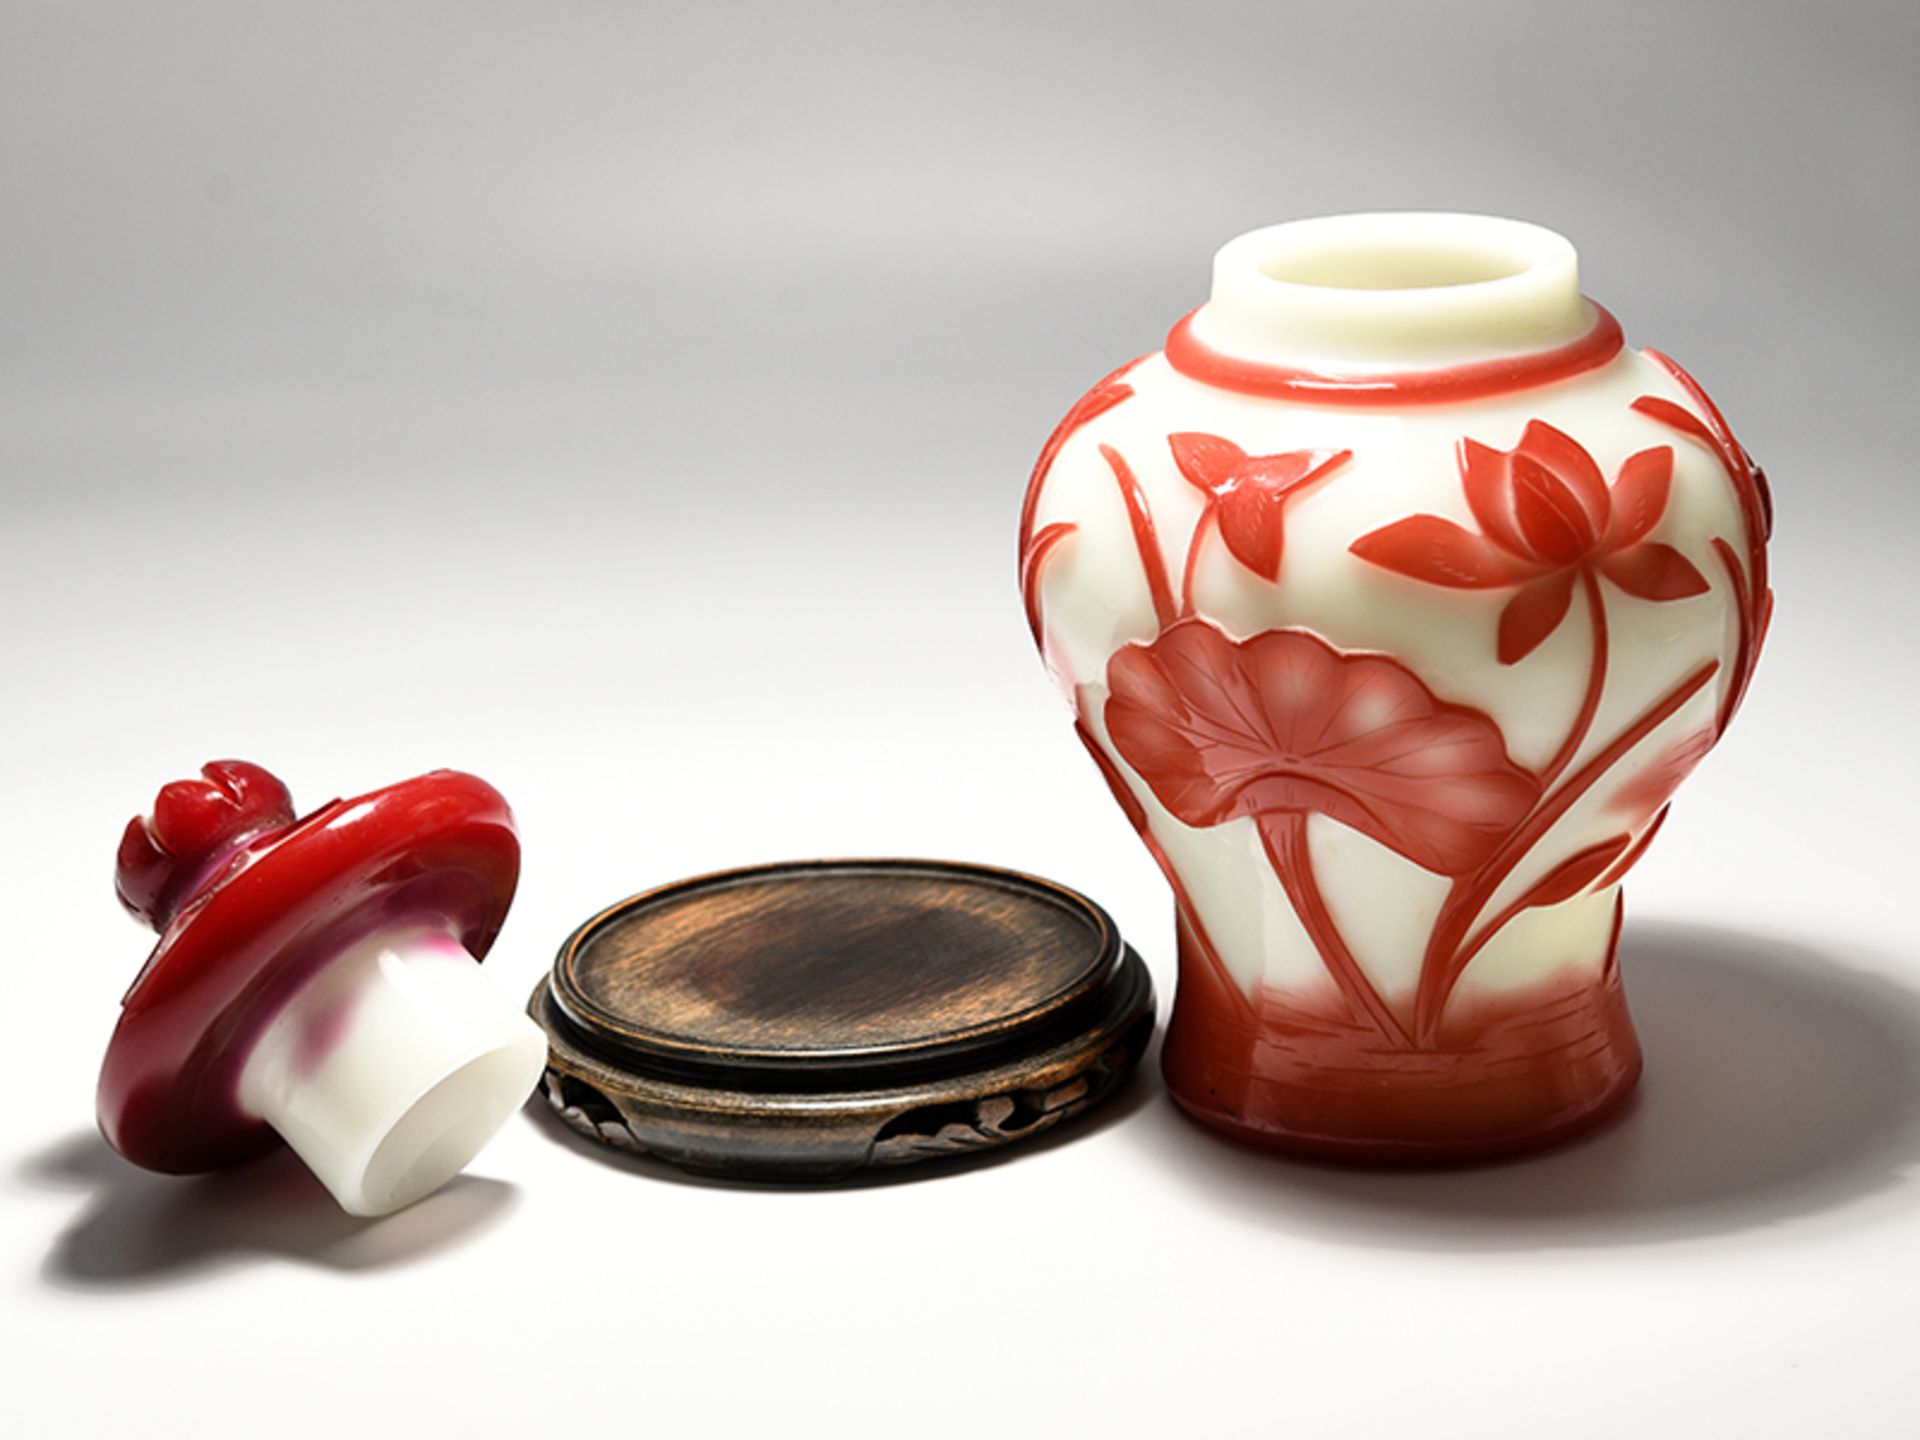 Balusterdeckelvase, Peking Cameo Glas, China, 20. Jh. brÃœberfangglas mit rotem, reliefiert geÃ¤ - Image 3 of 6